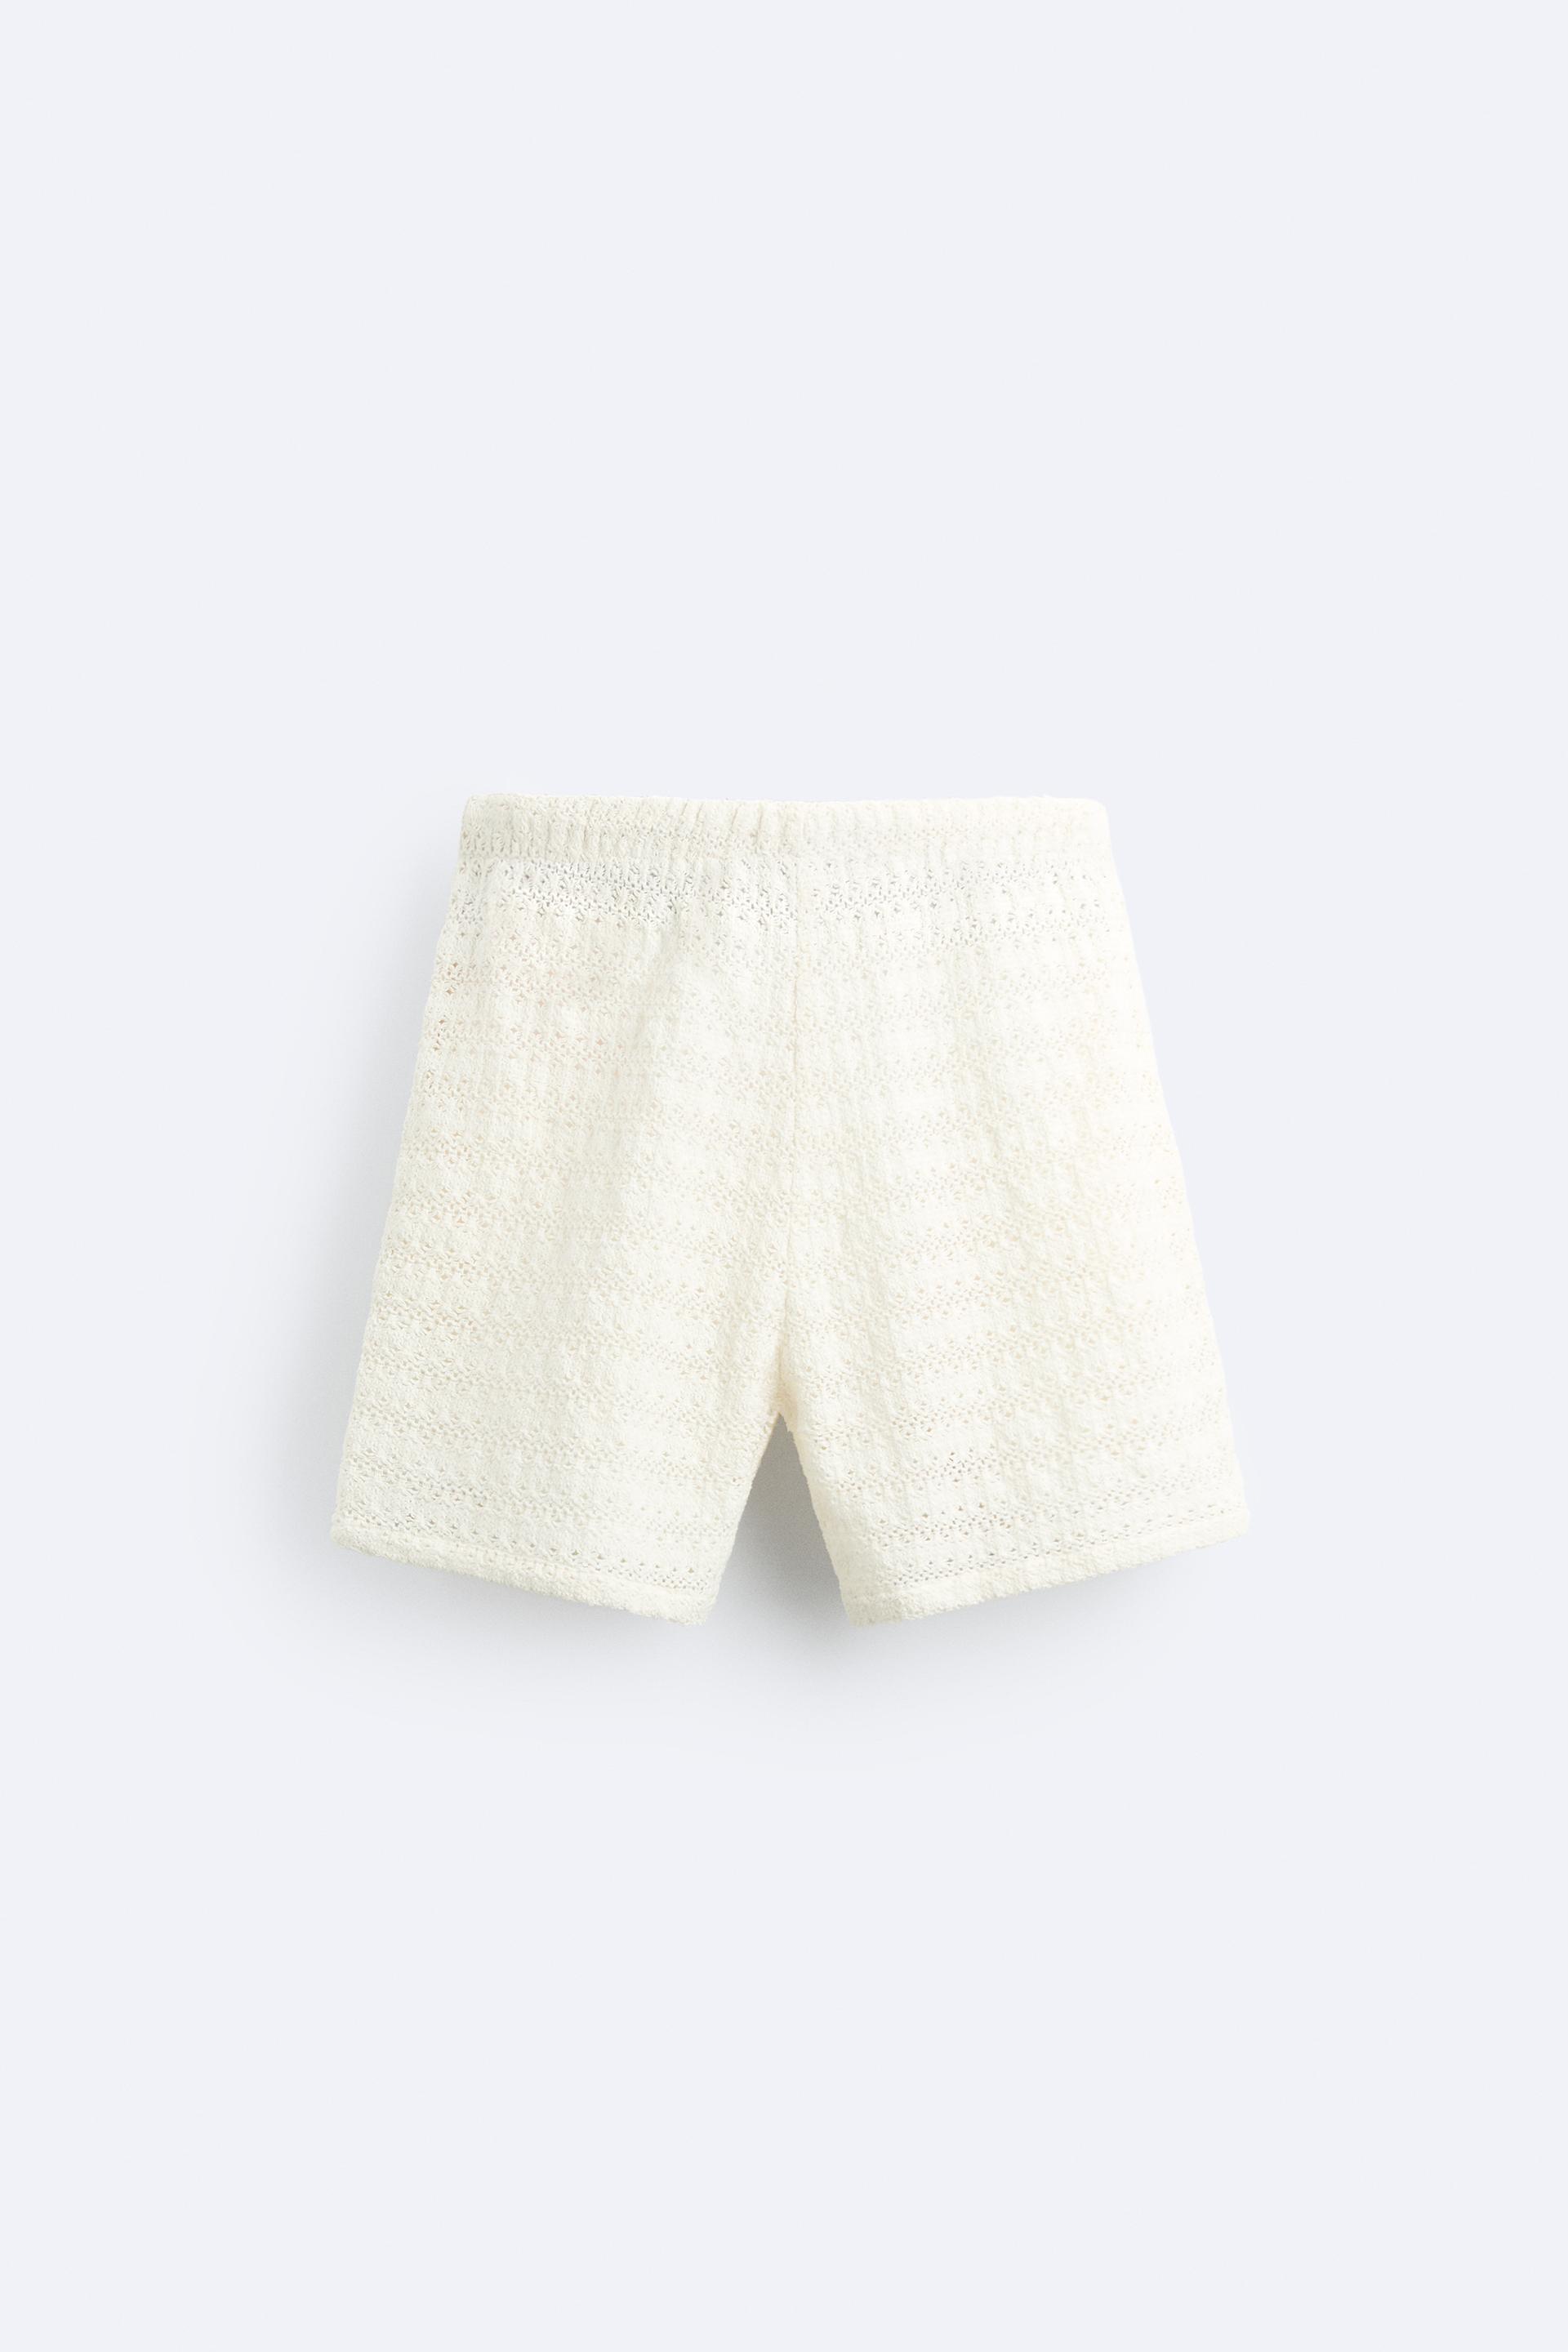 Crochet Shorts White Boxer Briefs  Knit fashion, Crochet fashion